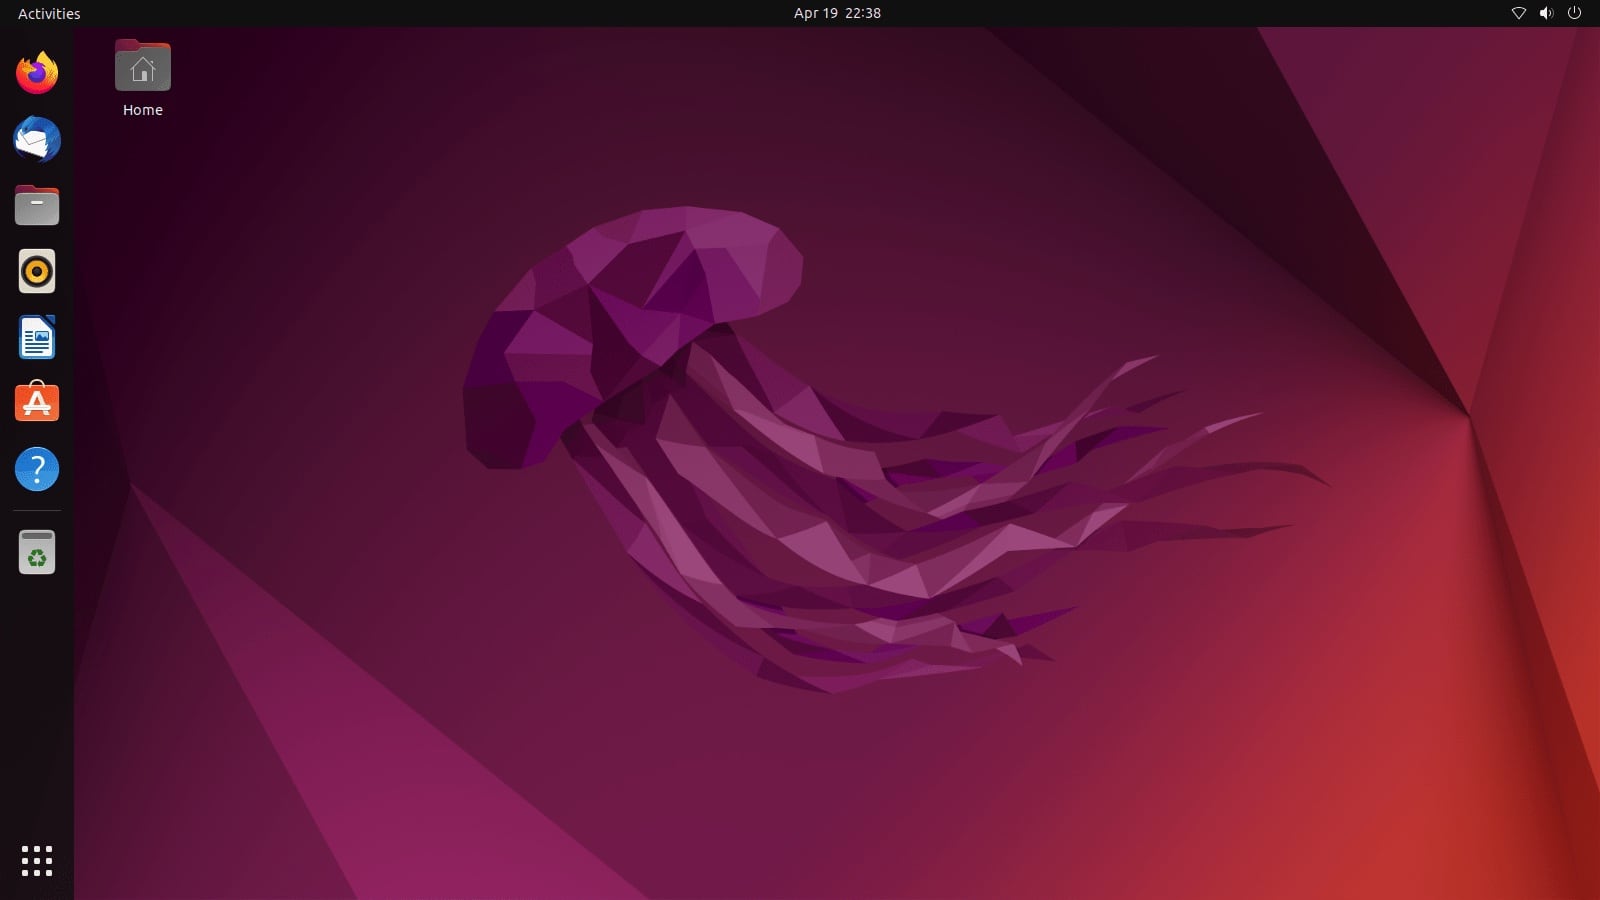 a screenshot of Ubuntu 22.04 desktop